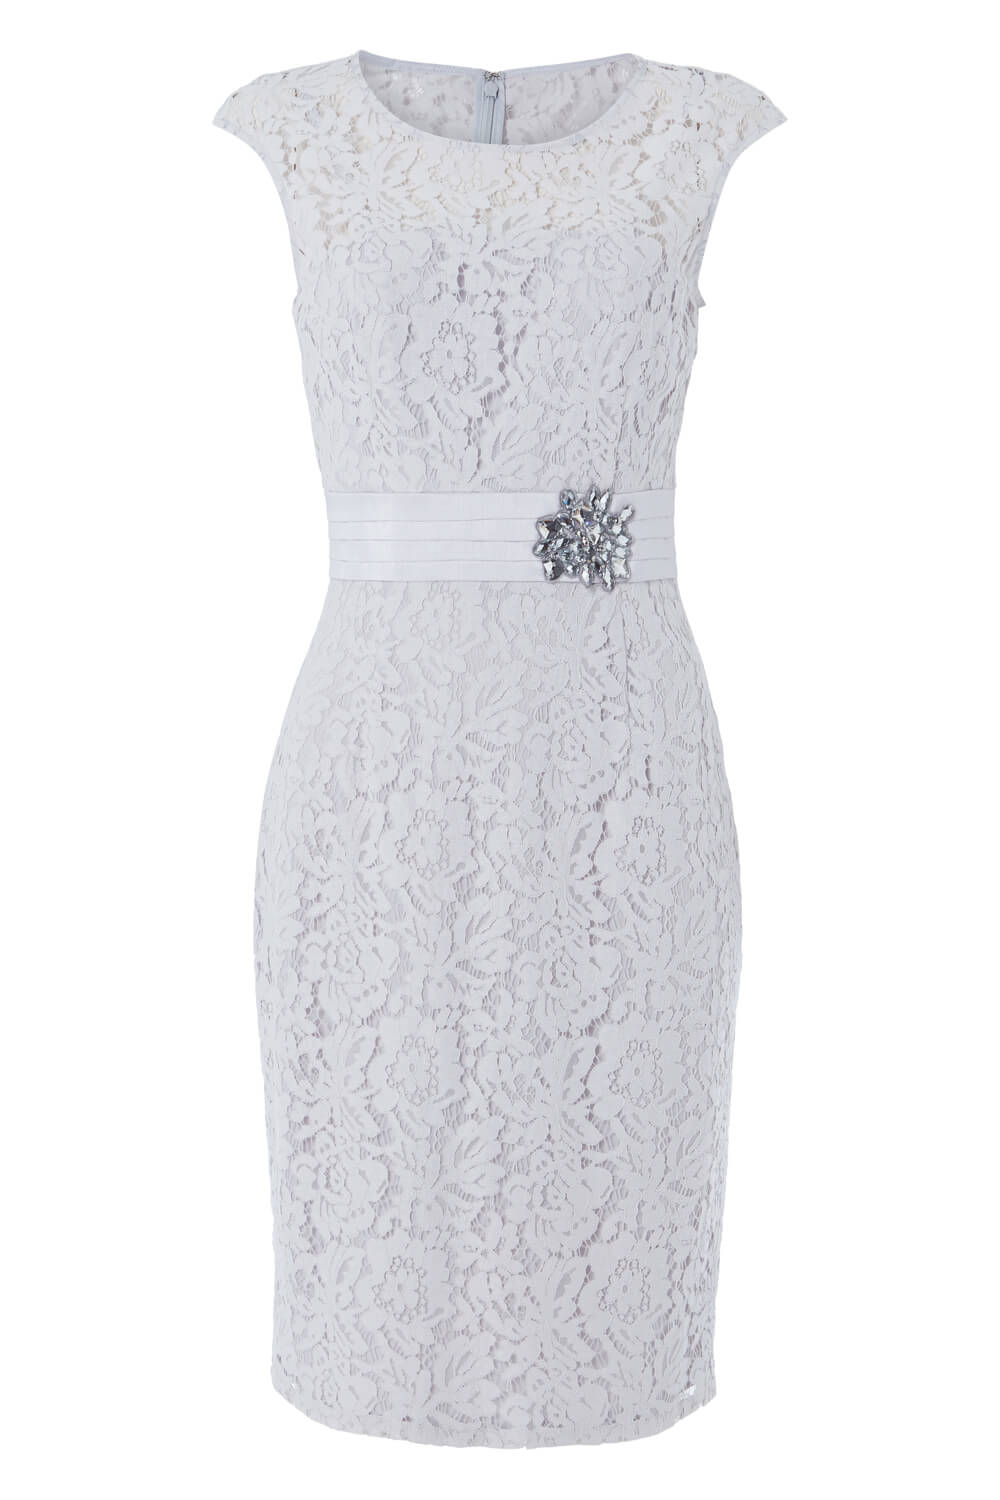 Silver Lace Embellished Trim Dress, Image 5 of 5